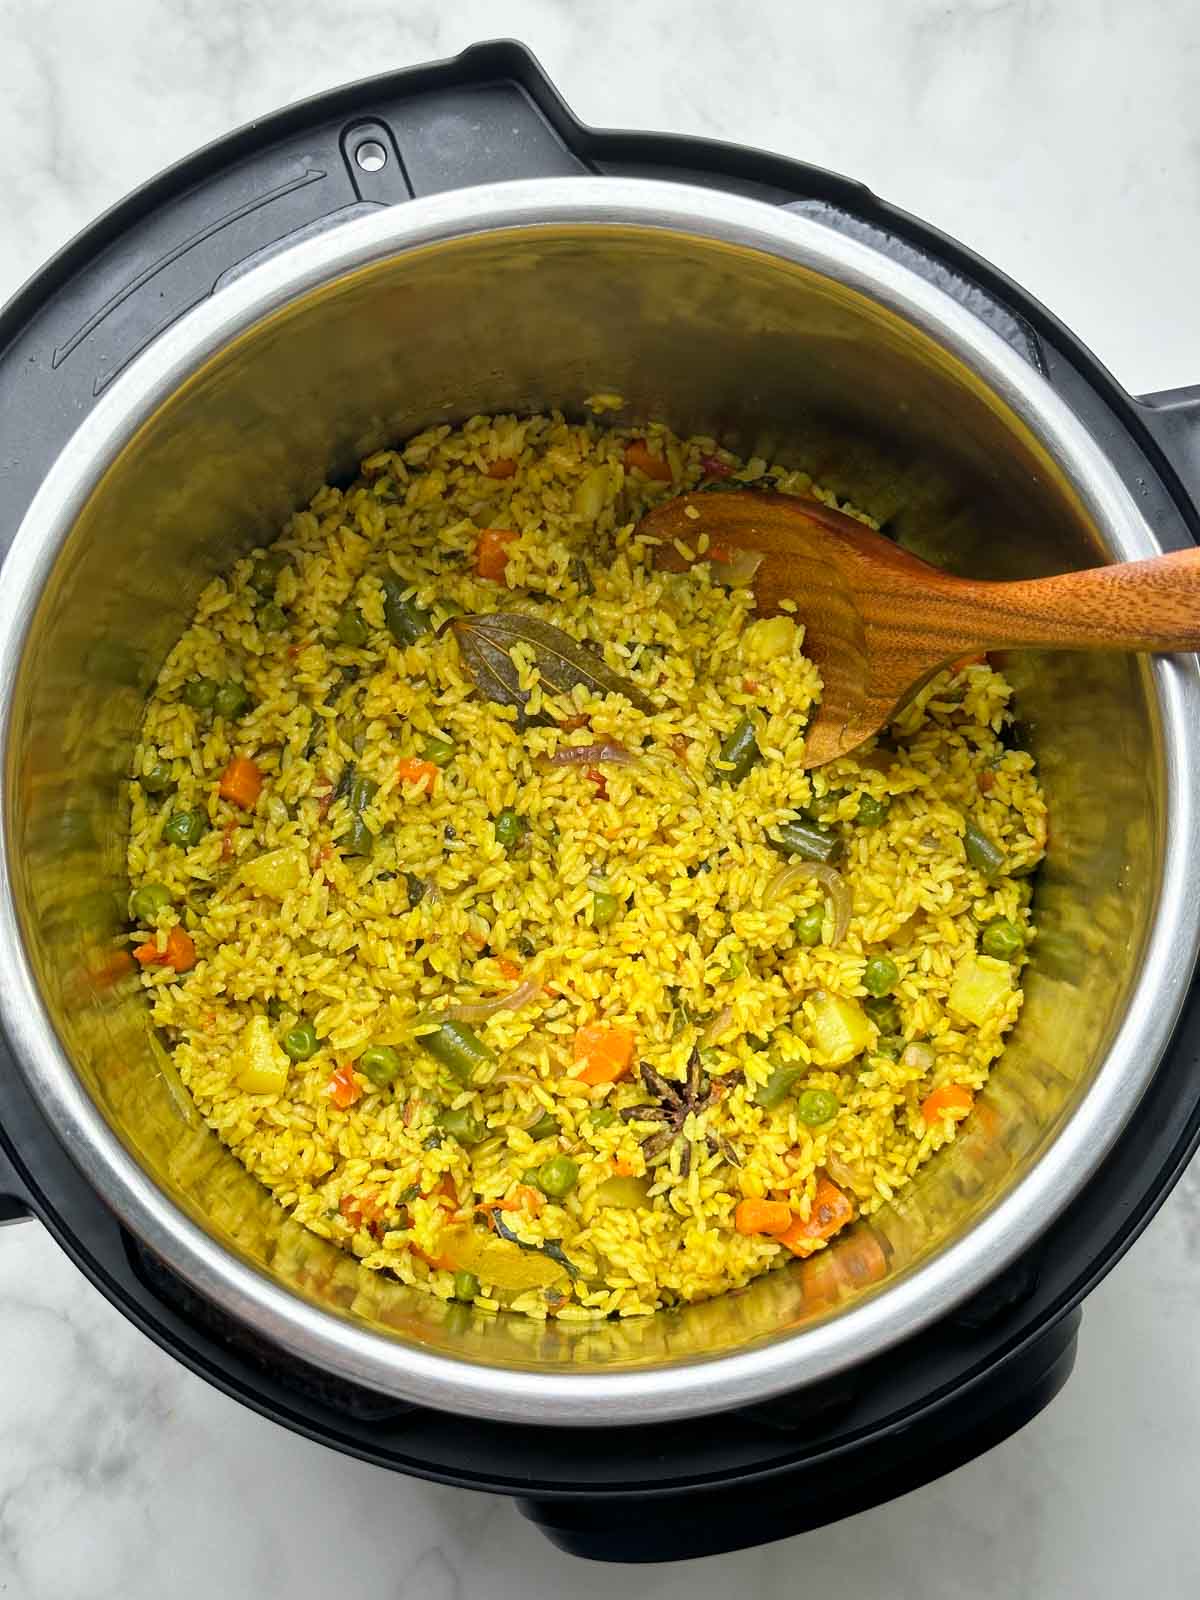 tamil nadu style seeraga samba rice veg biryani in the instant pot with a wooden laddle